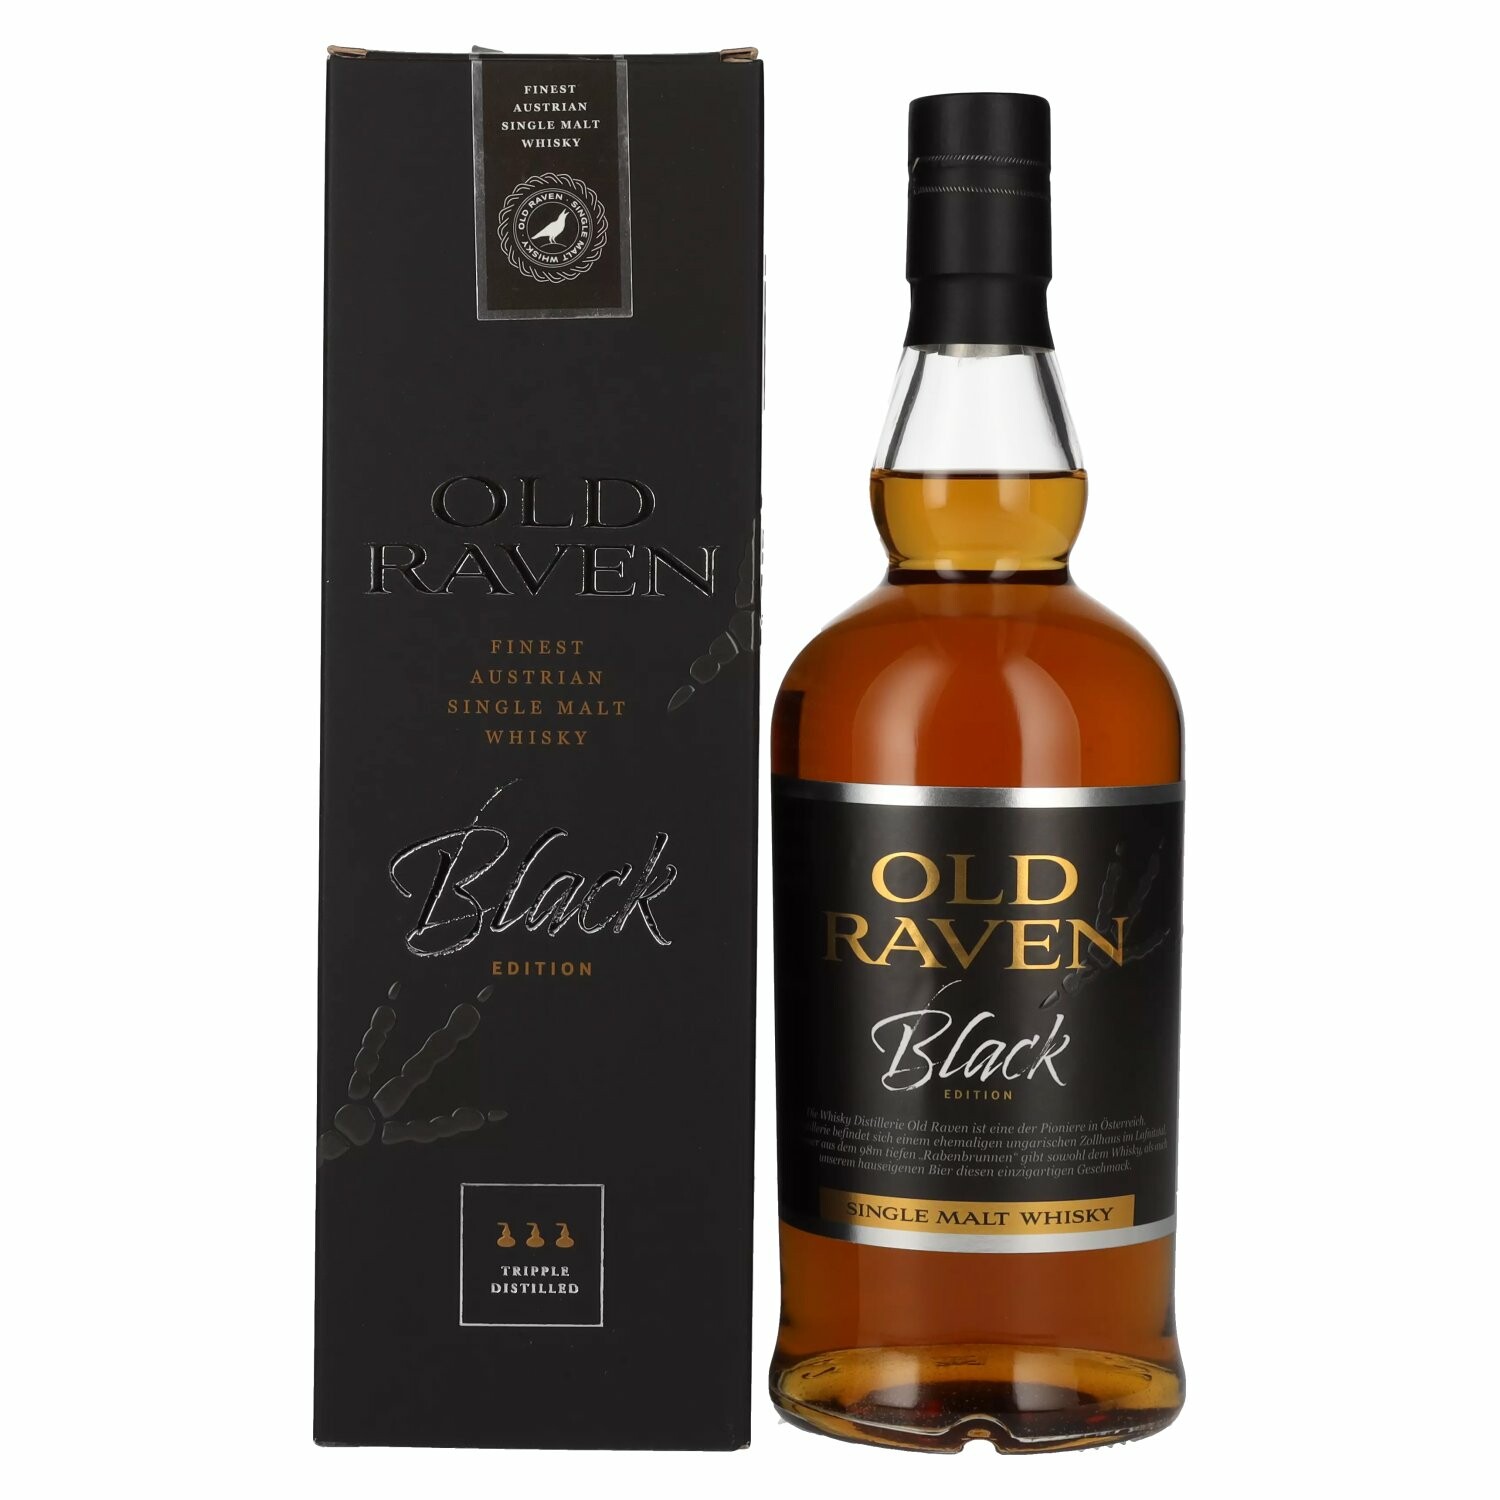 Old Raven Triple Distilled Single Malt Whisky Black Edition 41,8% Vol. 0,7l in Giftbox